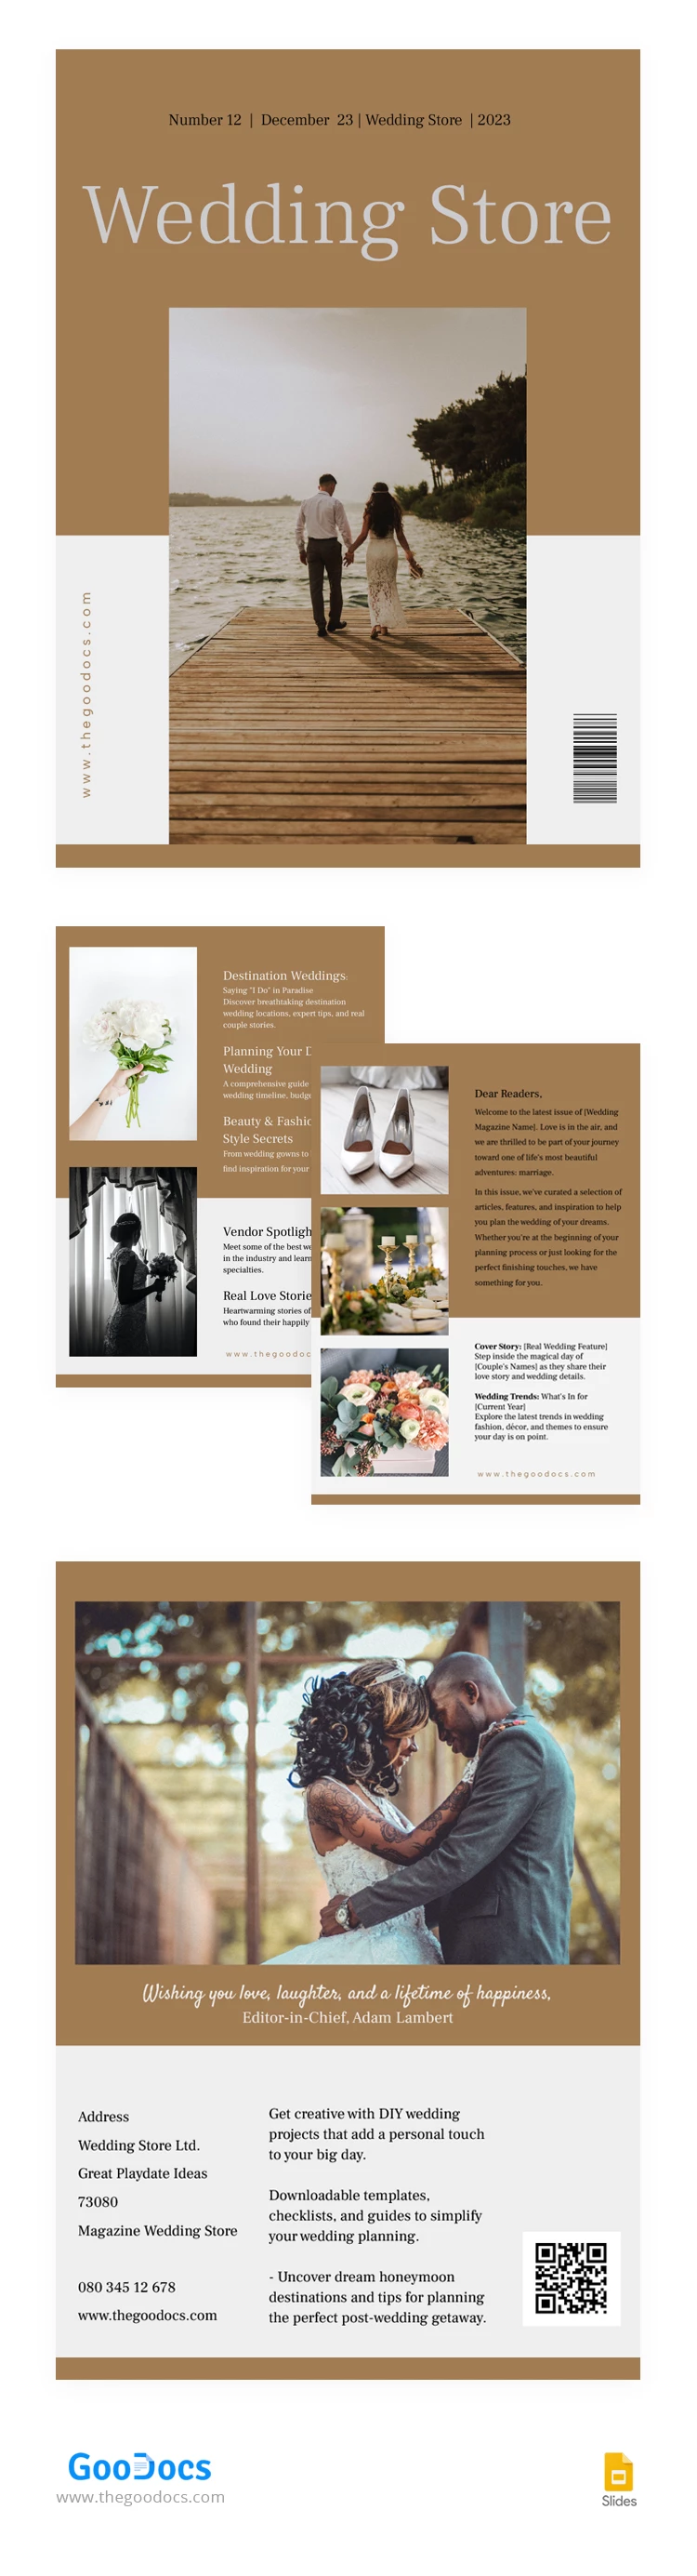 Wedding Store Magazine - free Google Docs Template - 10067124